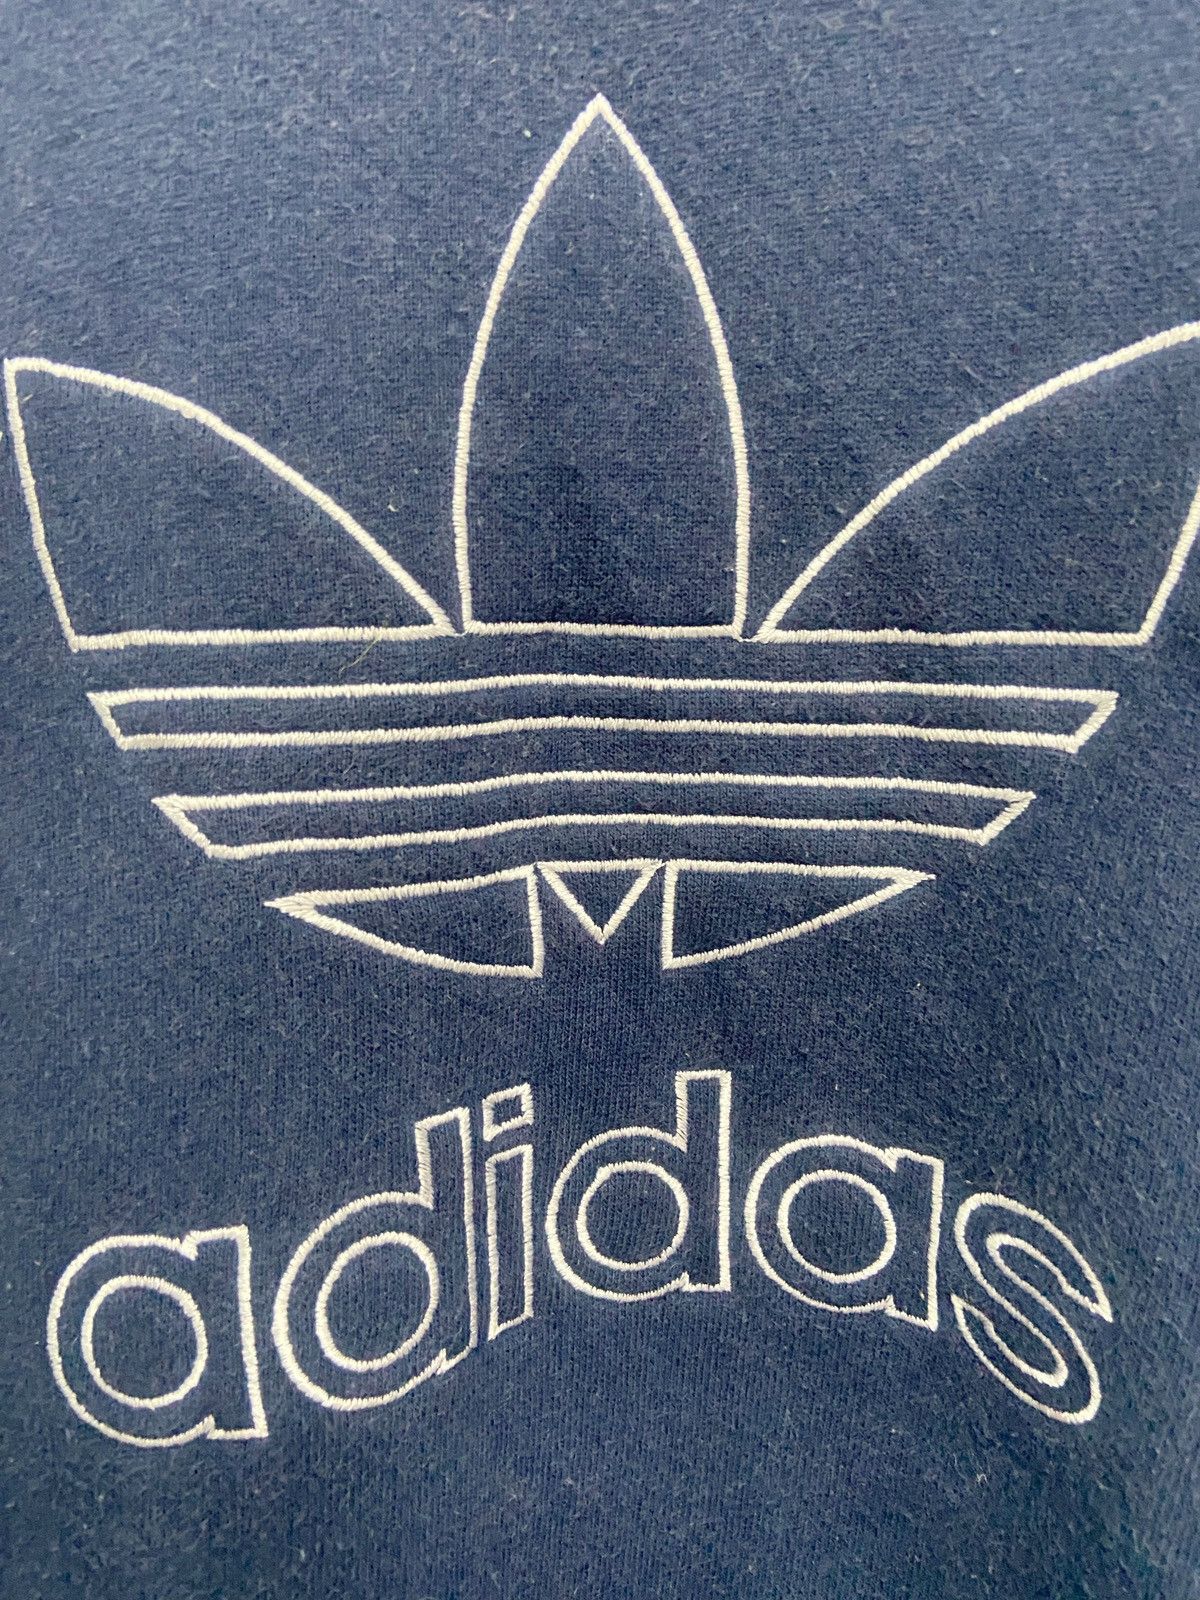 Vintage 90s Adidas Trefoil Big Logo Sweatshirt - 3